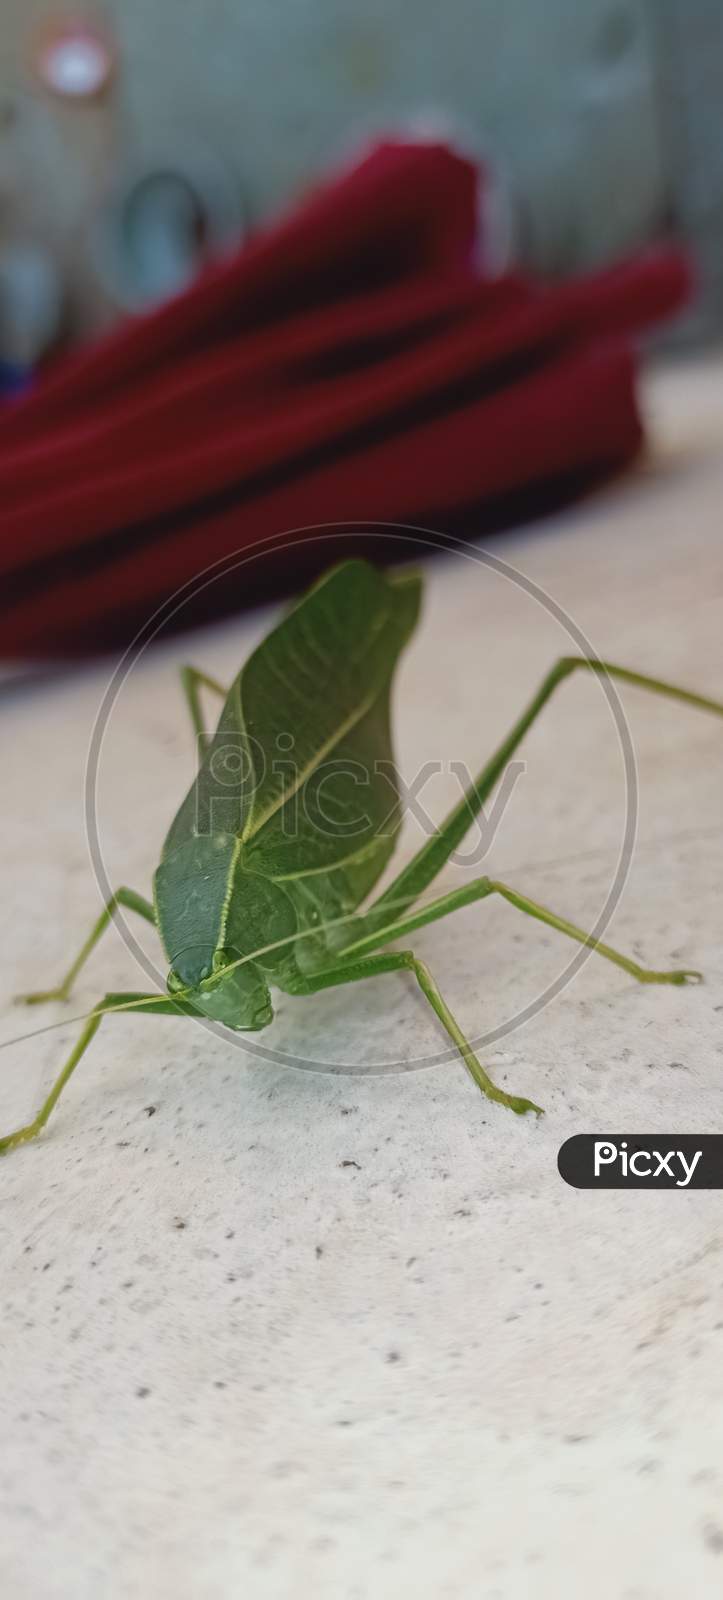 Grasshopper macro image